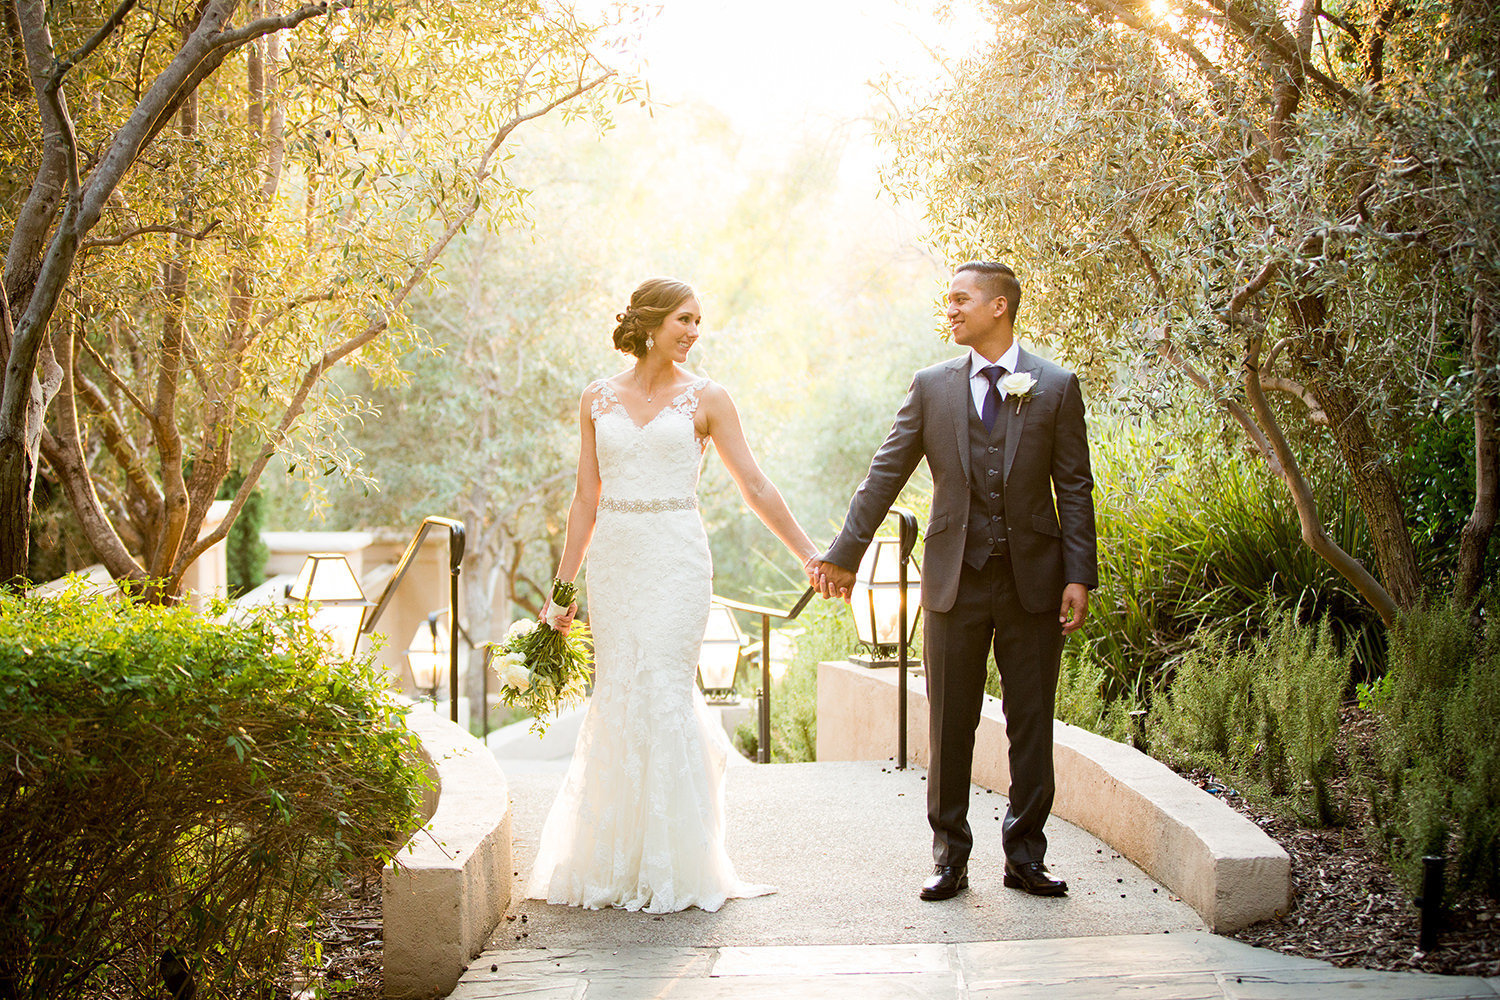 Bride and groom in a beautiful garden setting at Rancho Bernardo Inn